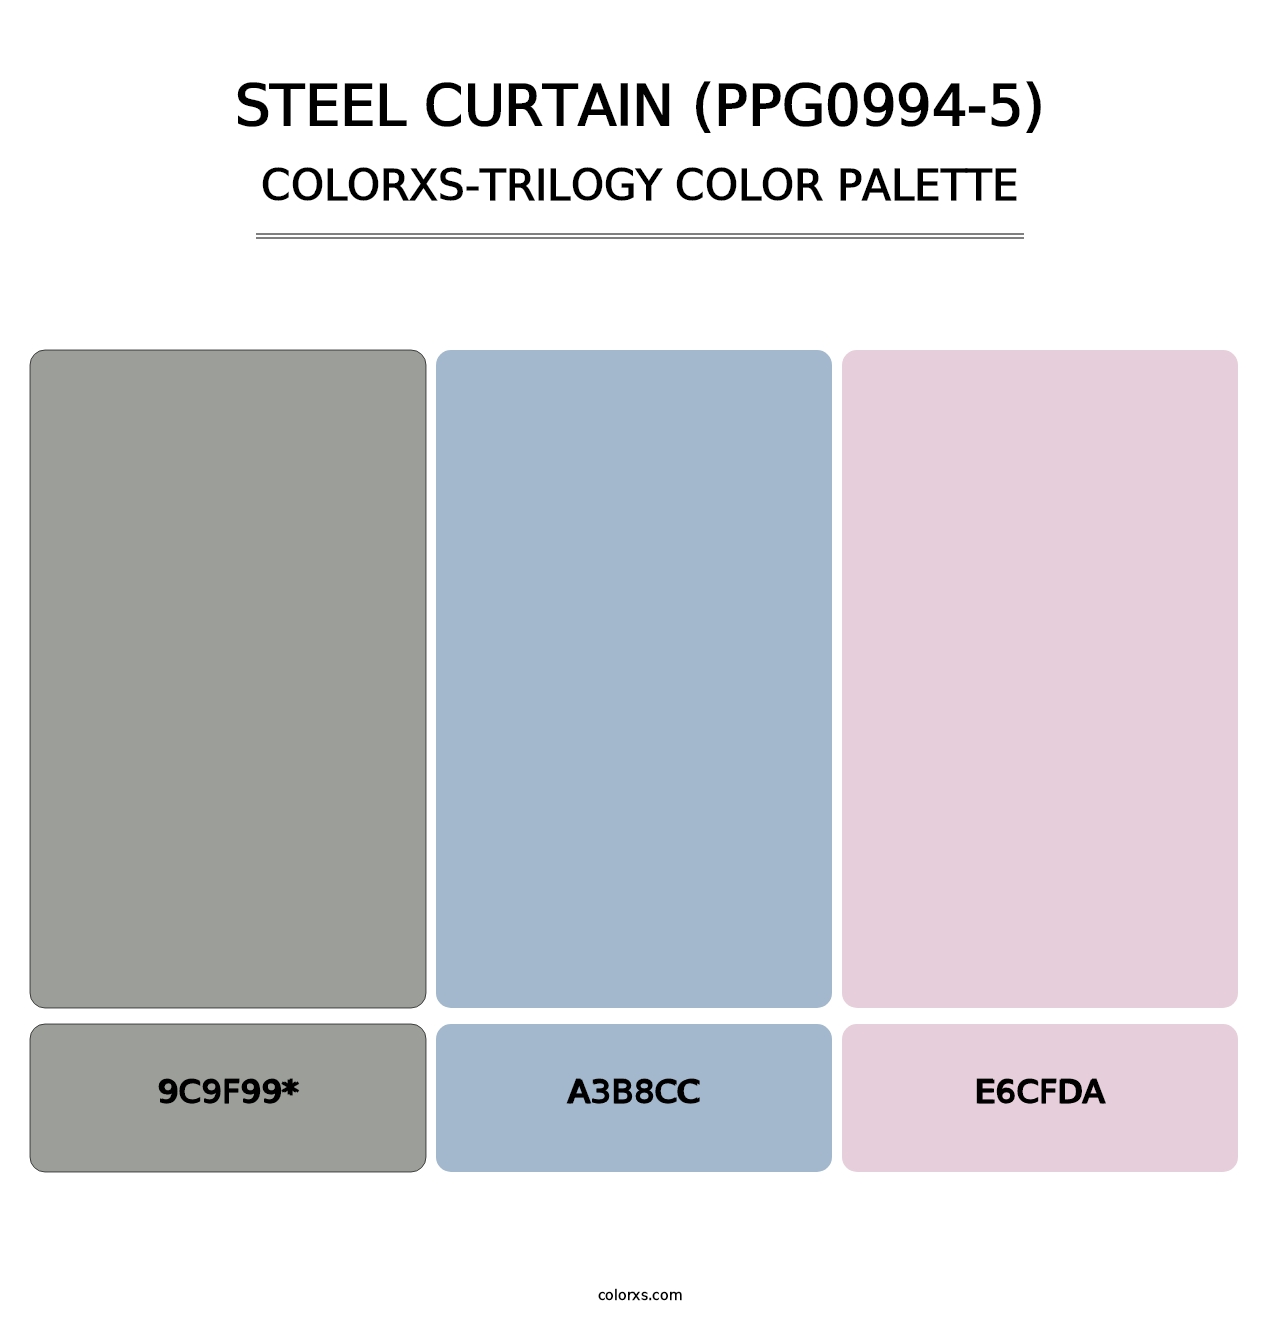 Steel Curtain (PPG0994-5) - Colorxs Trilogy Palette